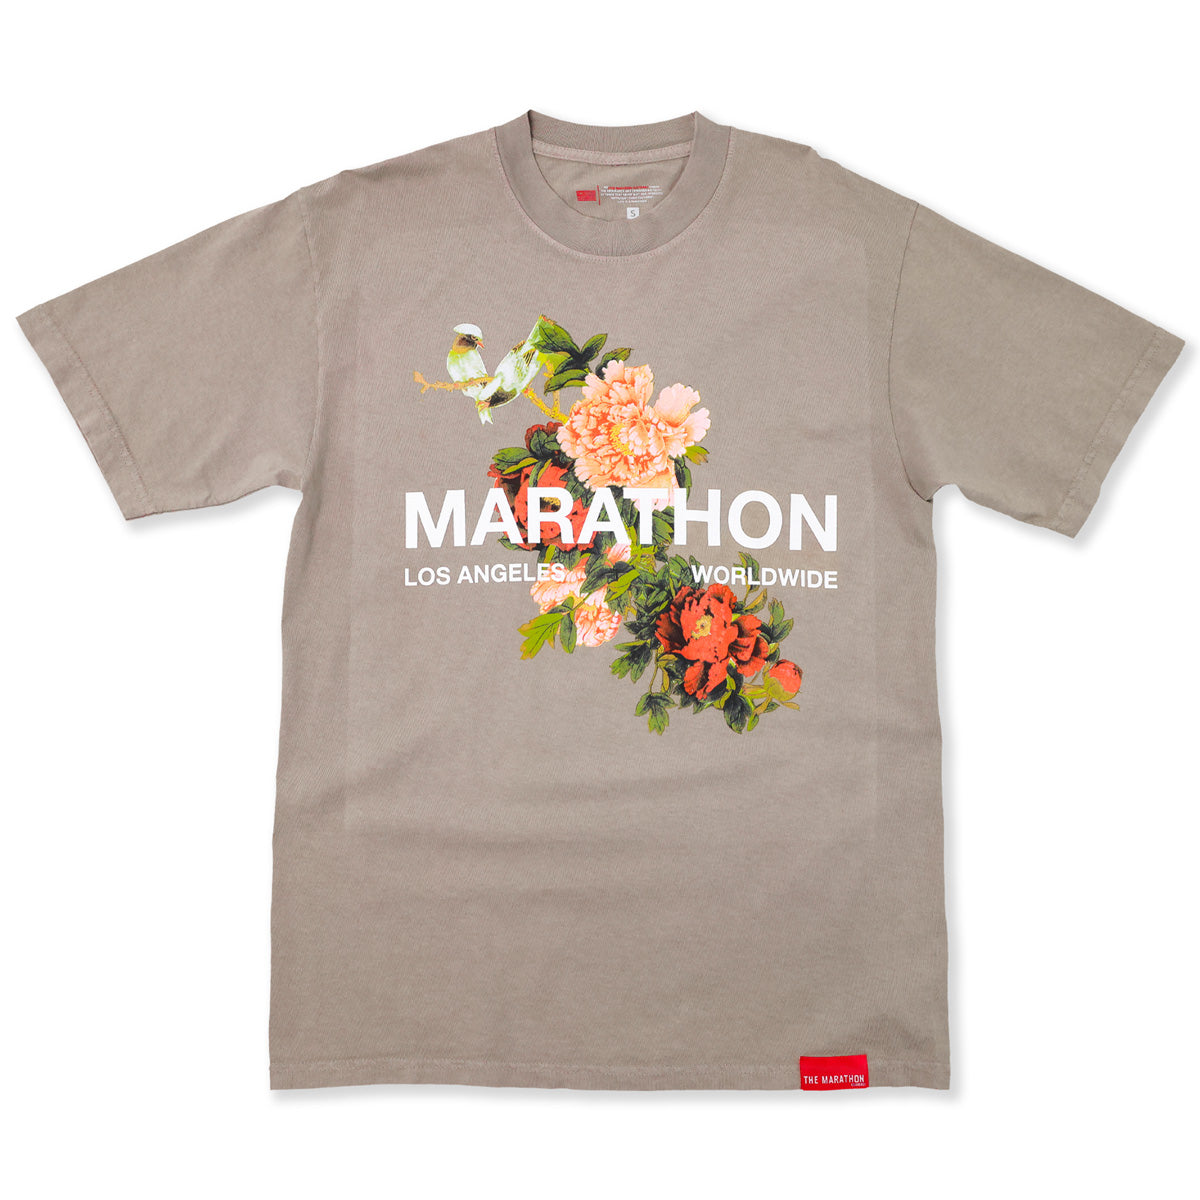  Marathon Global T-Shirt - Mocha - Front